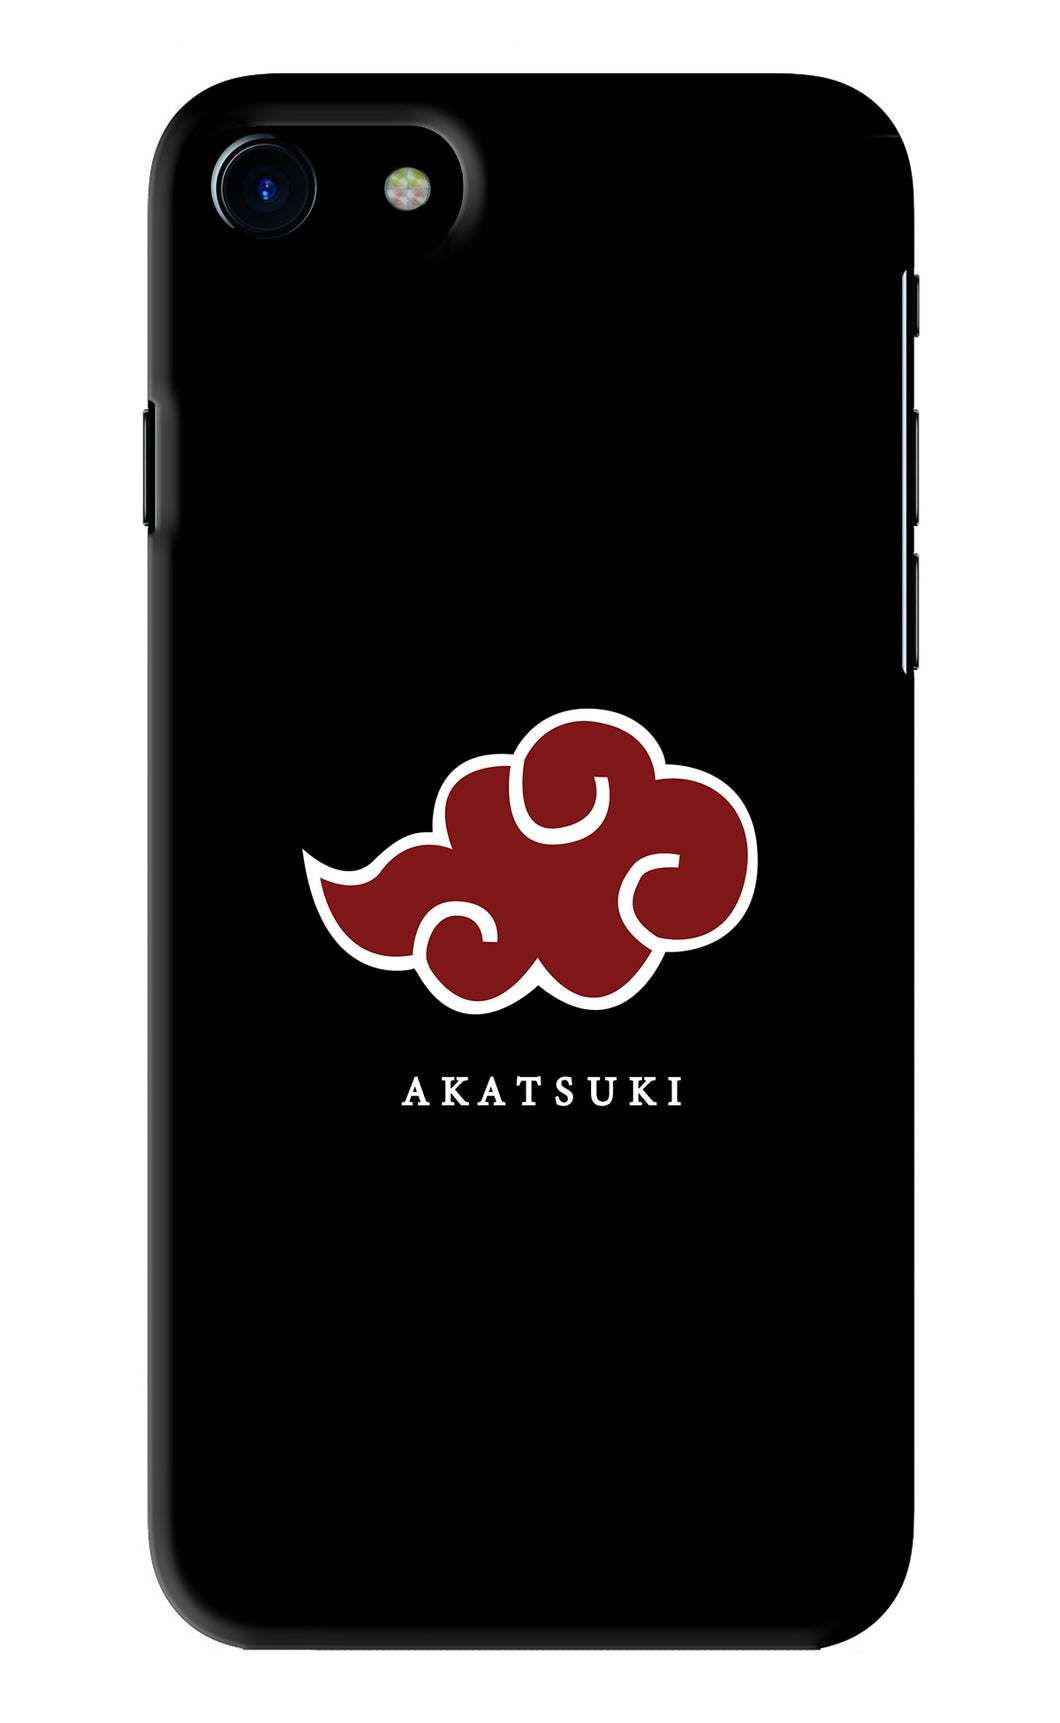 Akatsuki 1 iPhone 7 Back Skin Wrap